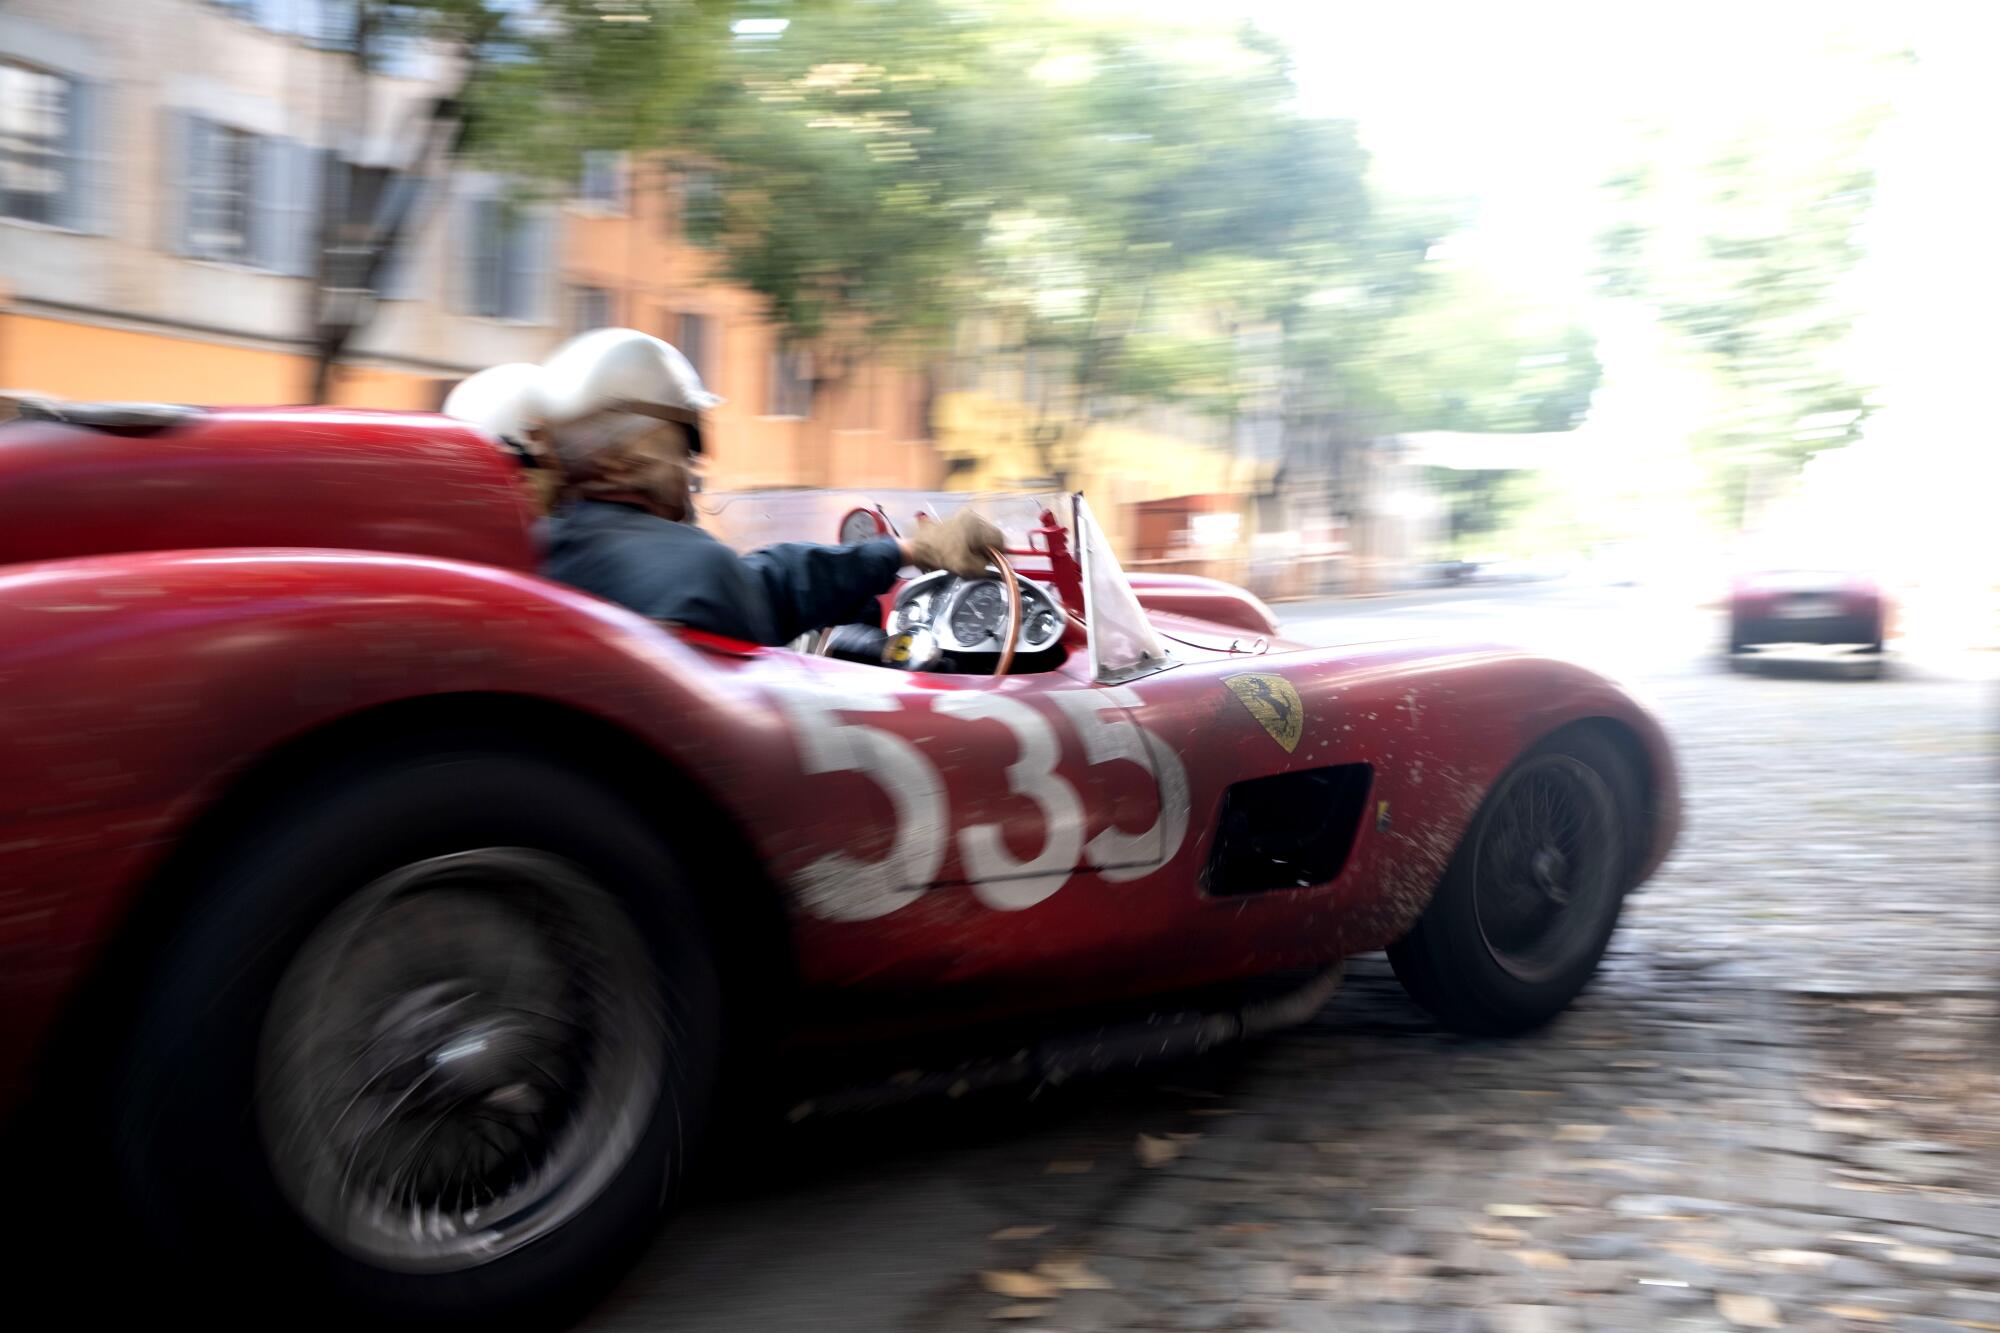 A red race car speeds down an Italian road.